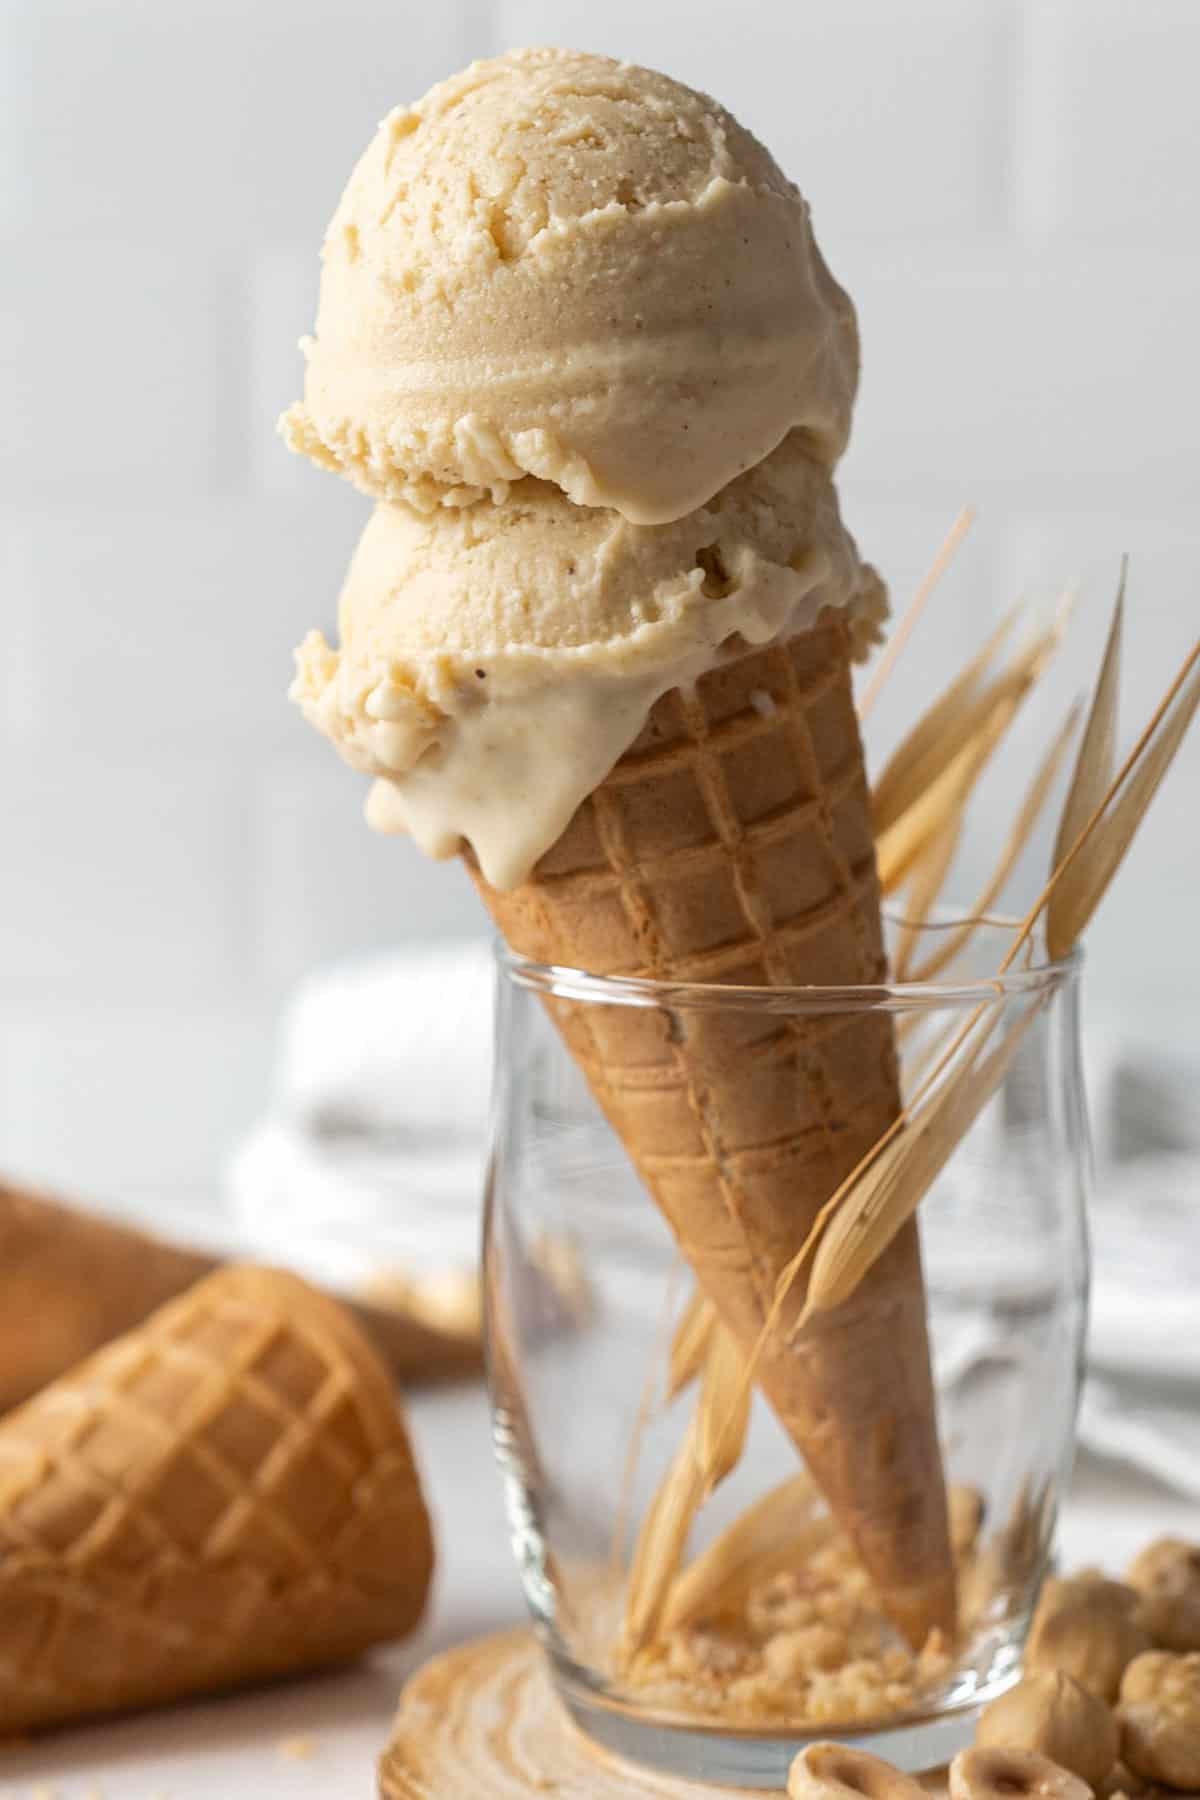 Ice cream in a cone in a glass.